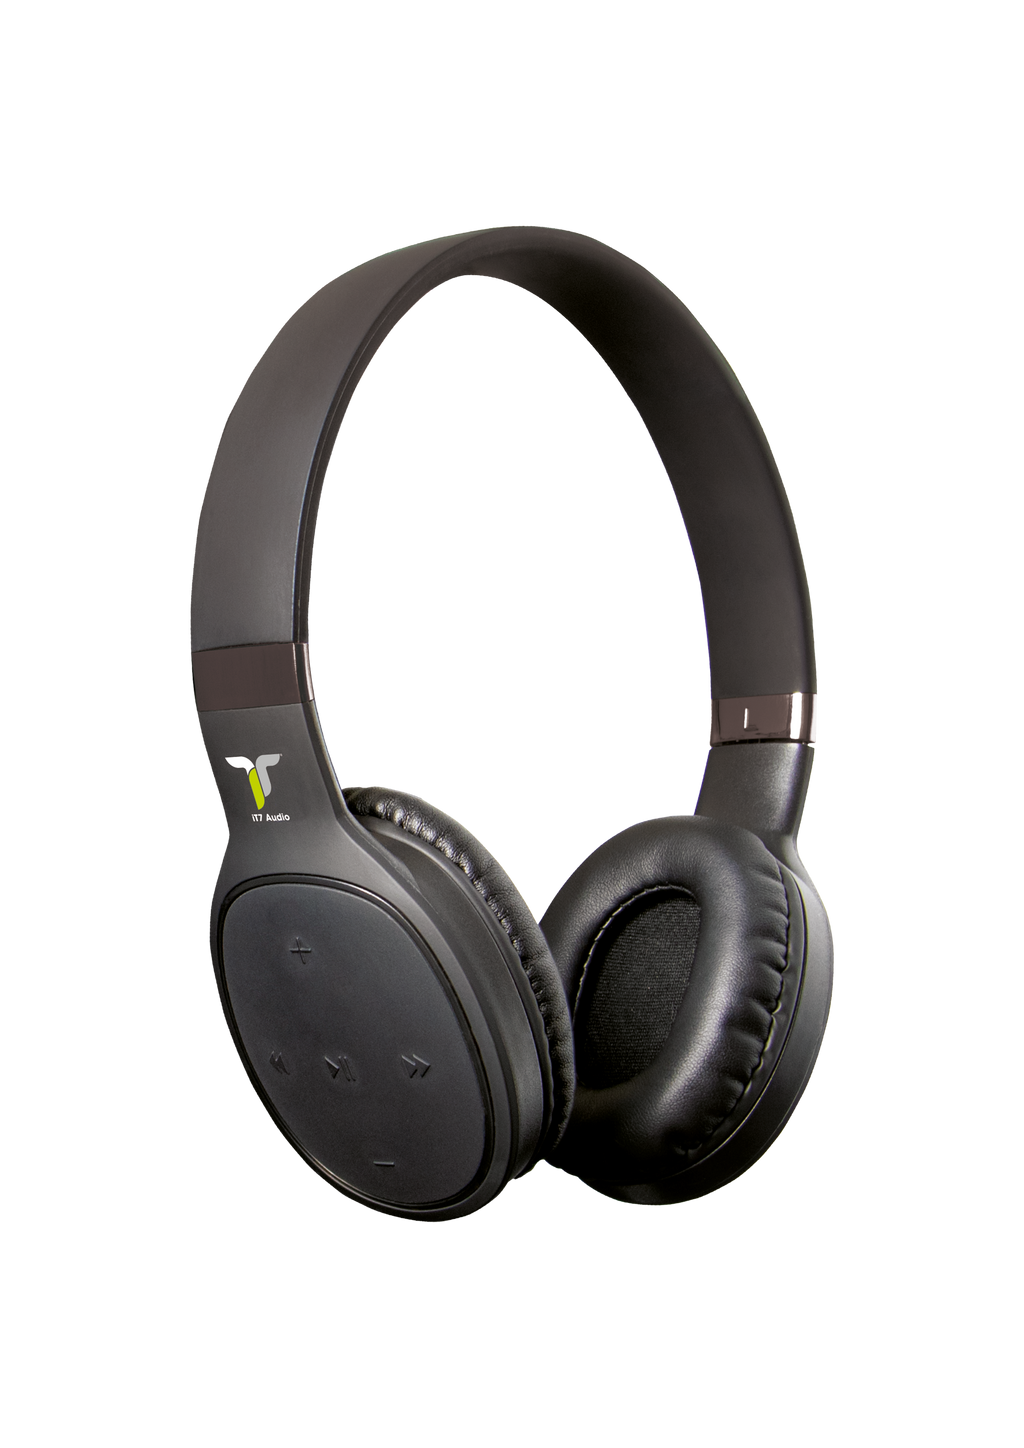 iT7xr Bluetooth® Stereo Headphones